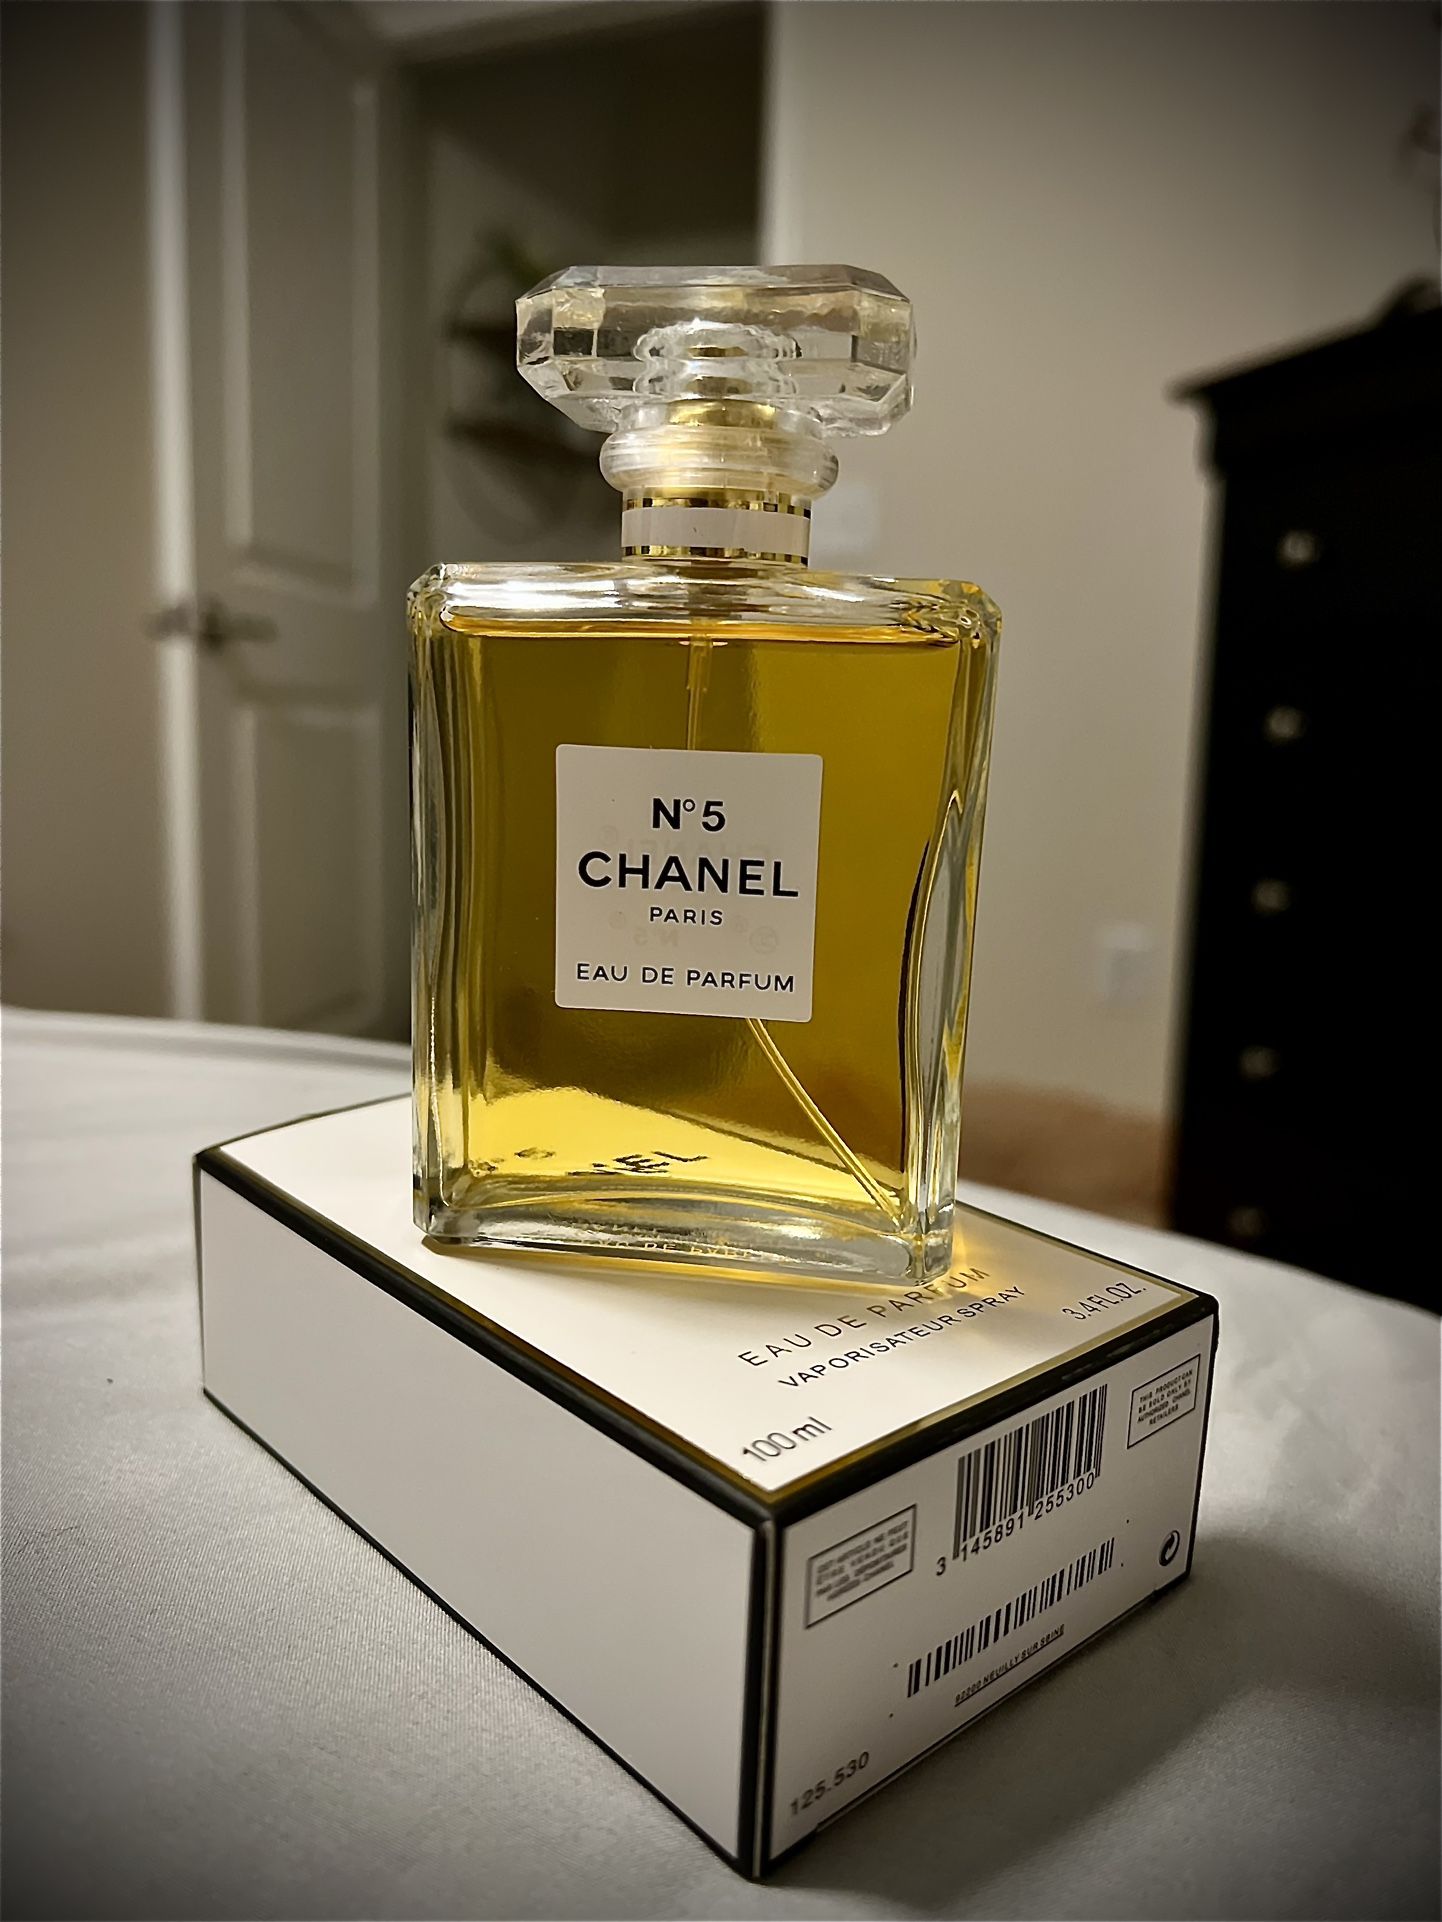 Chanel Paris N°5 Perfume